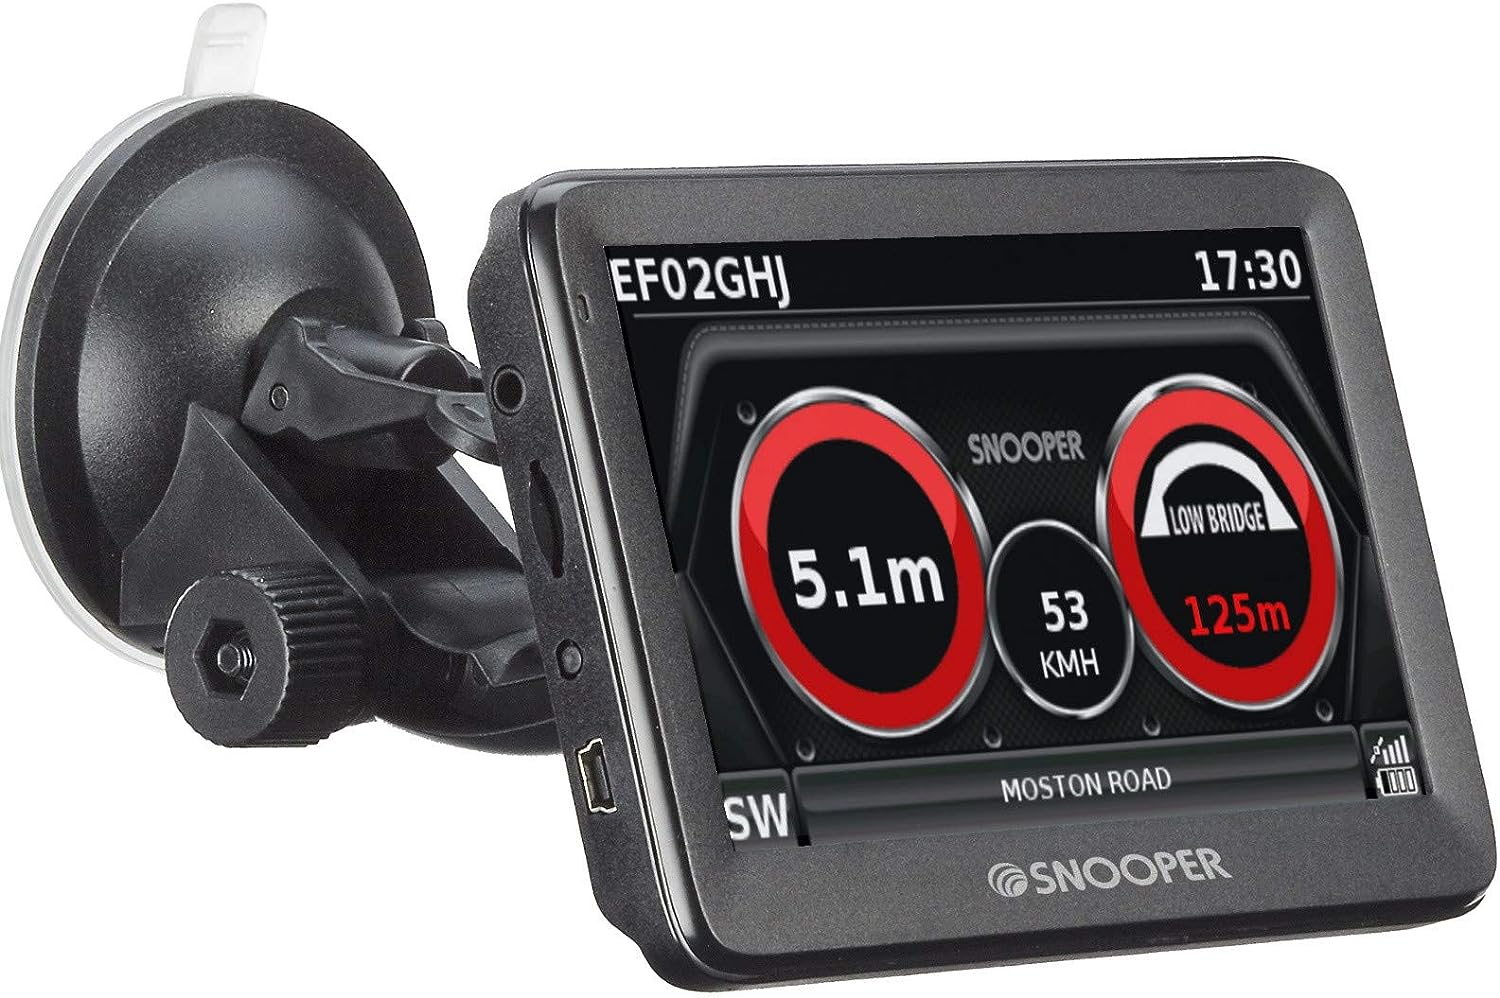 S5100 Truckmate Bridge-Saver-Plus Low Bridge Alert System with 5" LCD Touchscreen